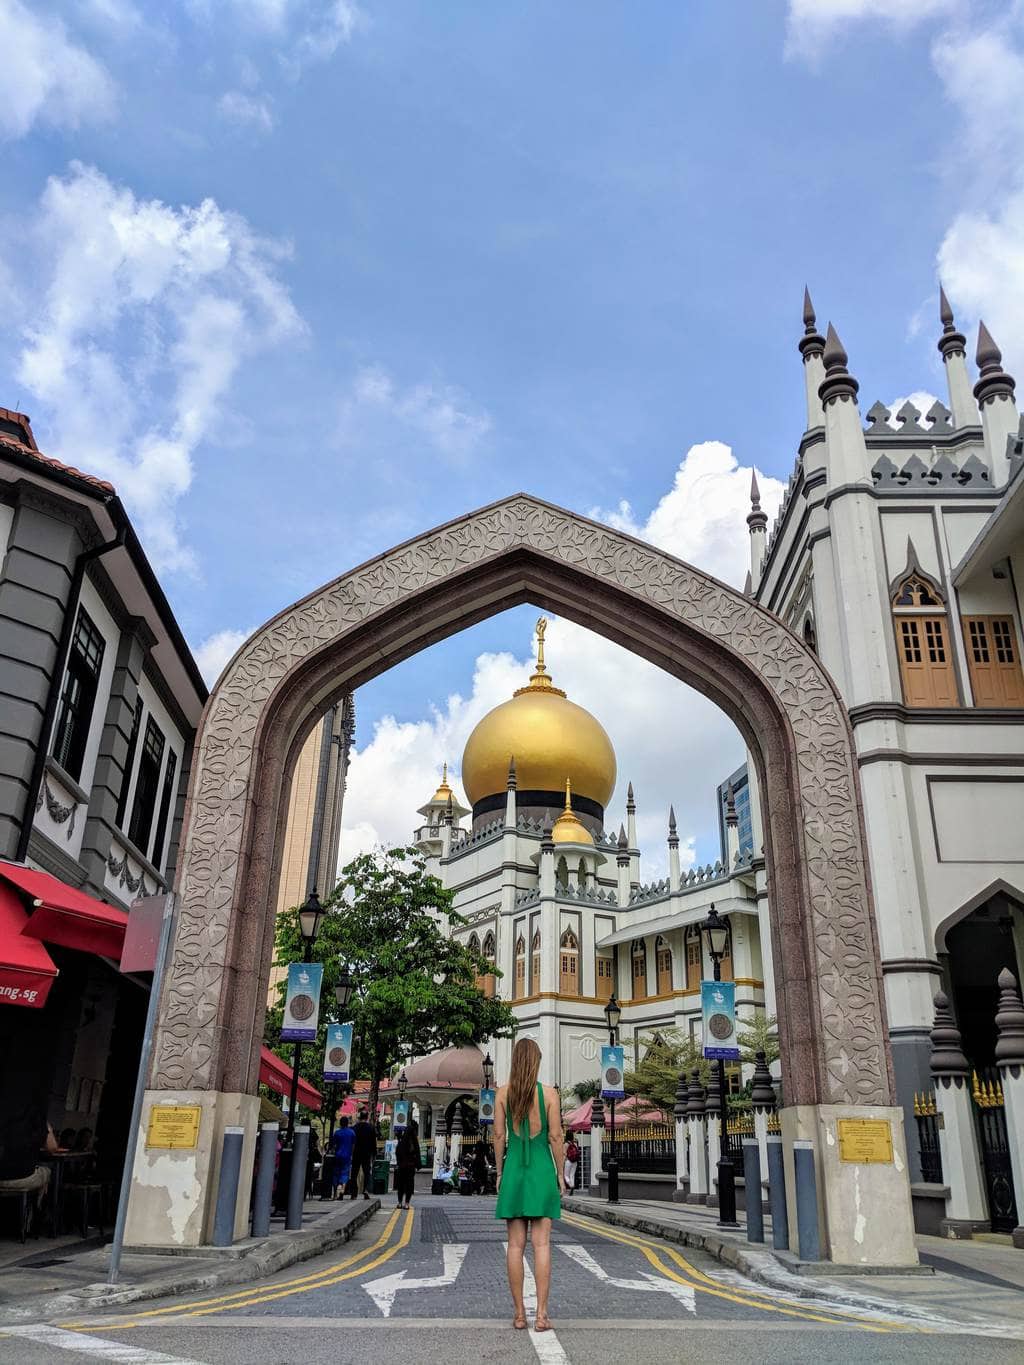 Singapore's Sultan Mosque